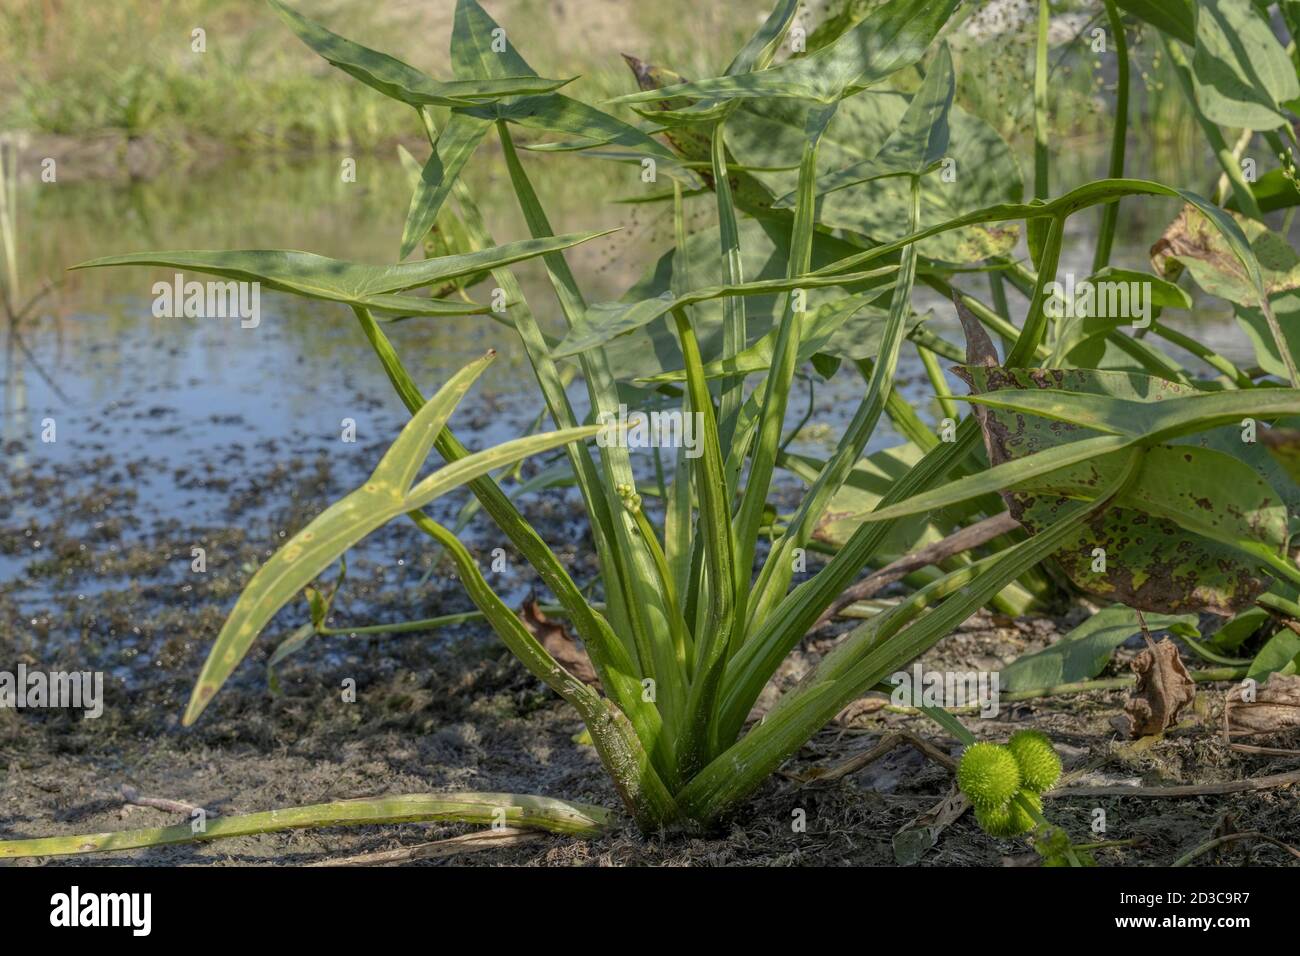 aquatic plant Arrowhead, arrowhead, duck potato, katniss or Omodaka (Sagittaria) Stock Photo